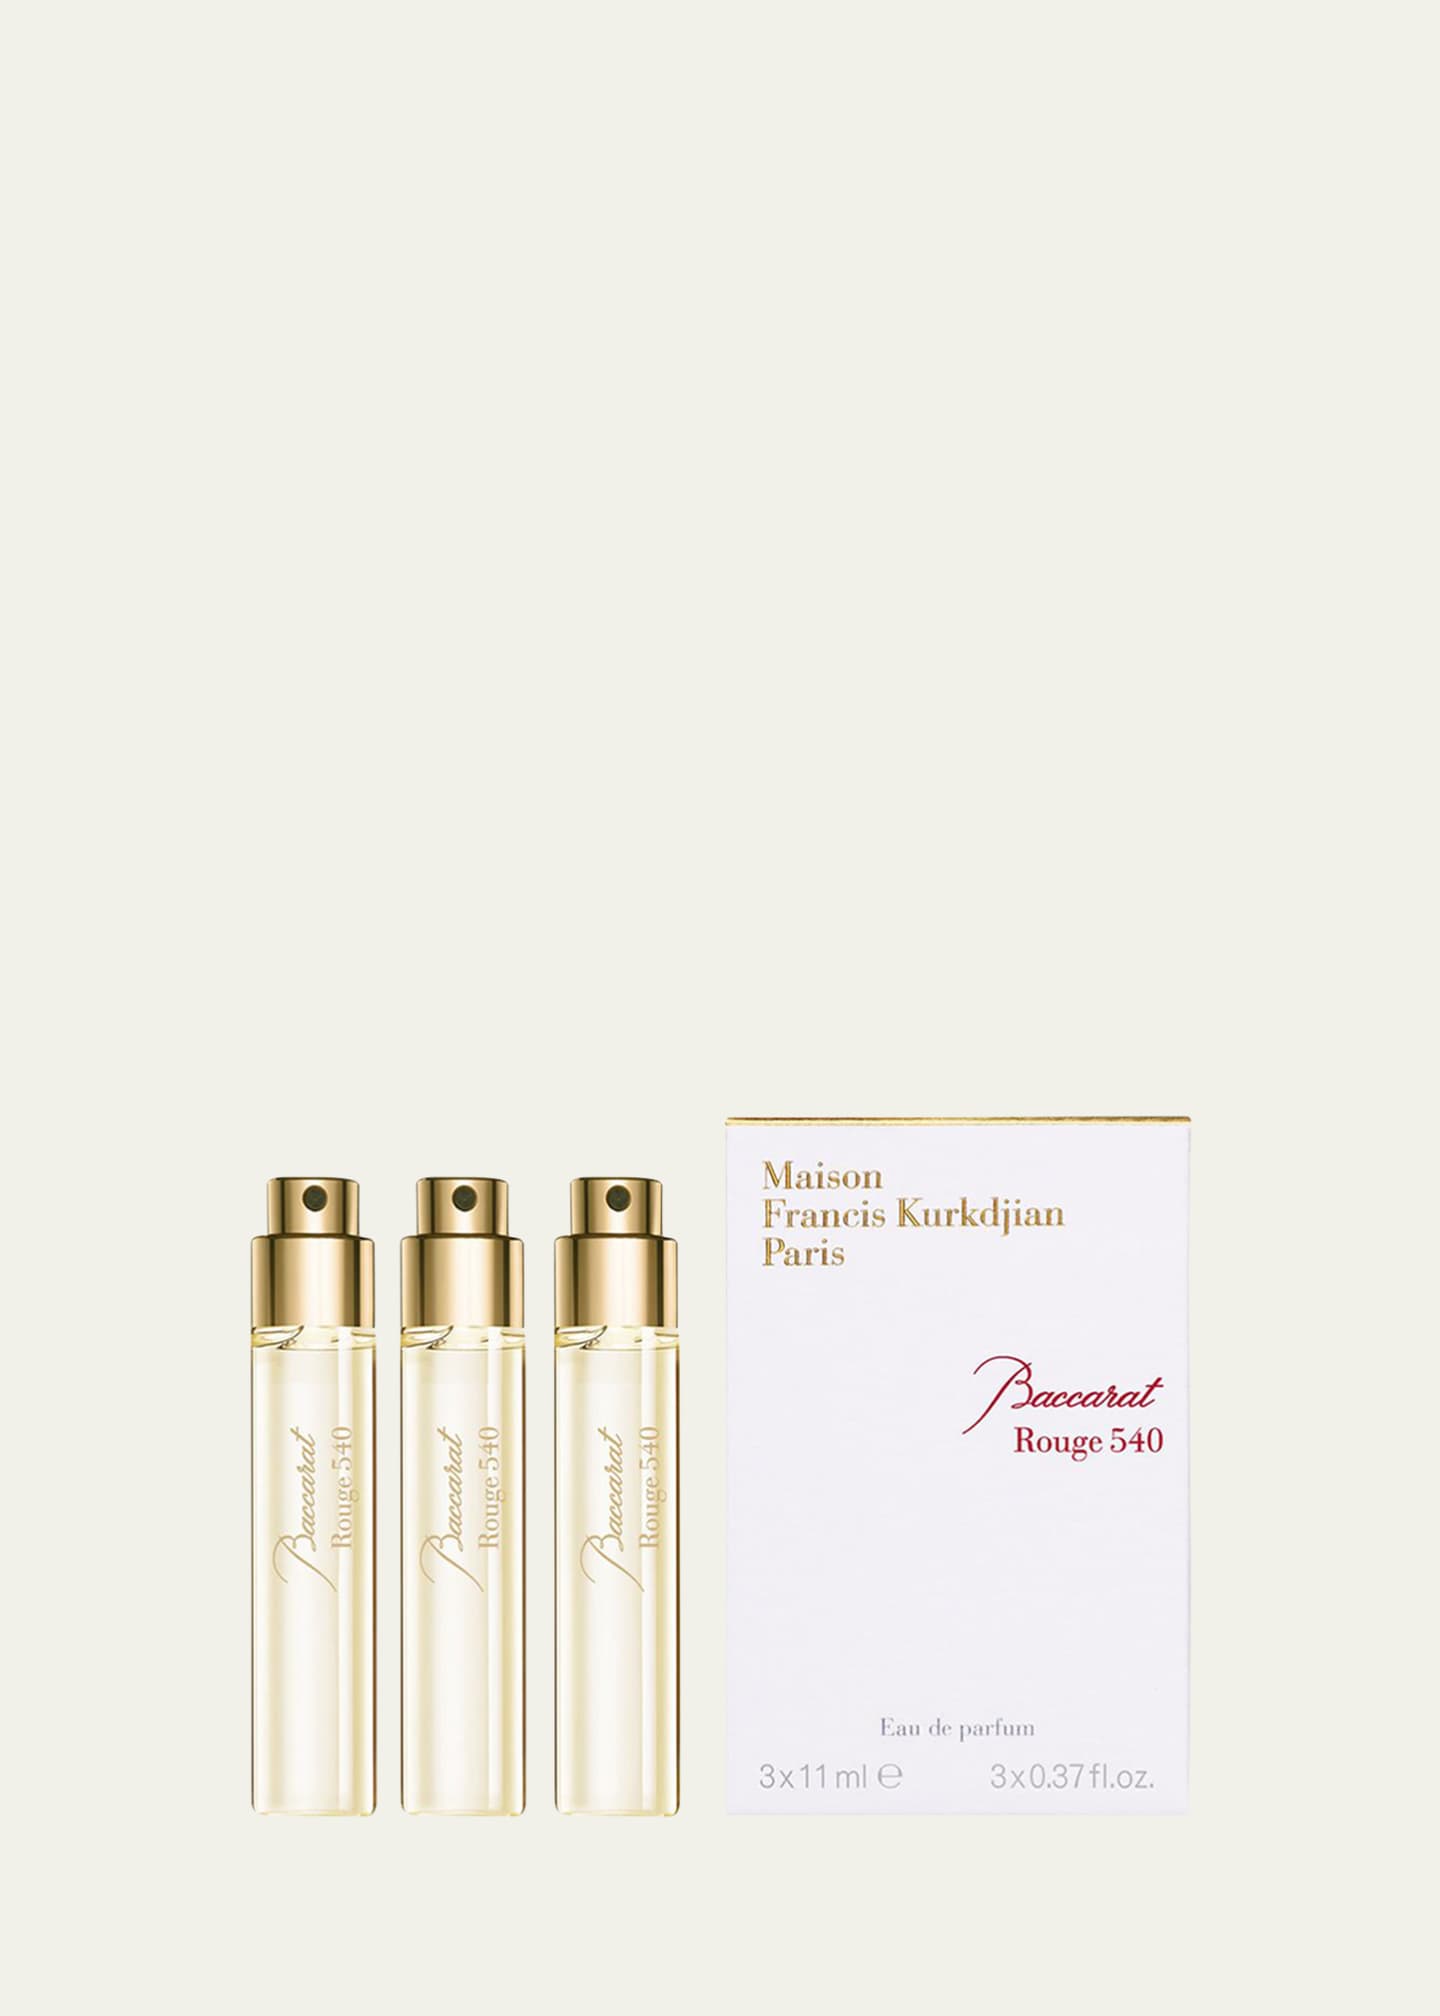 Maison Francis Kurkdjian Baccarat Rouge 540 Eau de Parfum Travel Spray Refills, 3 x 0.37 oz.